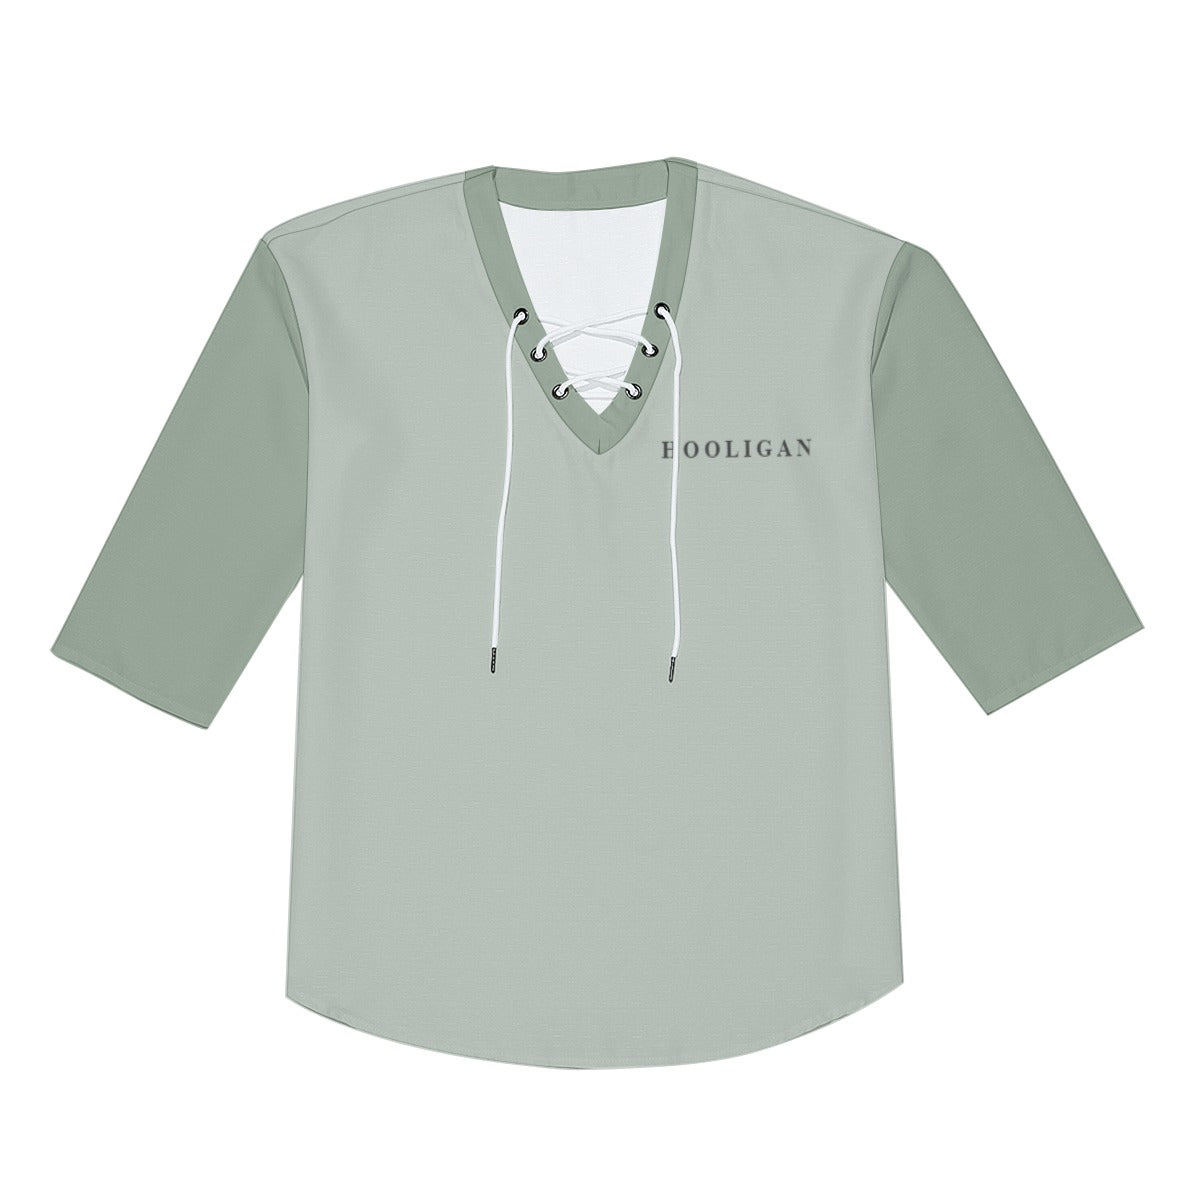 All-Over Print Men's Bracelet Sleeve T-shirt With Neckline Tie Closure